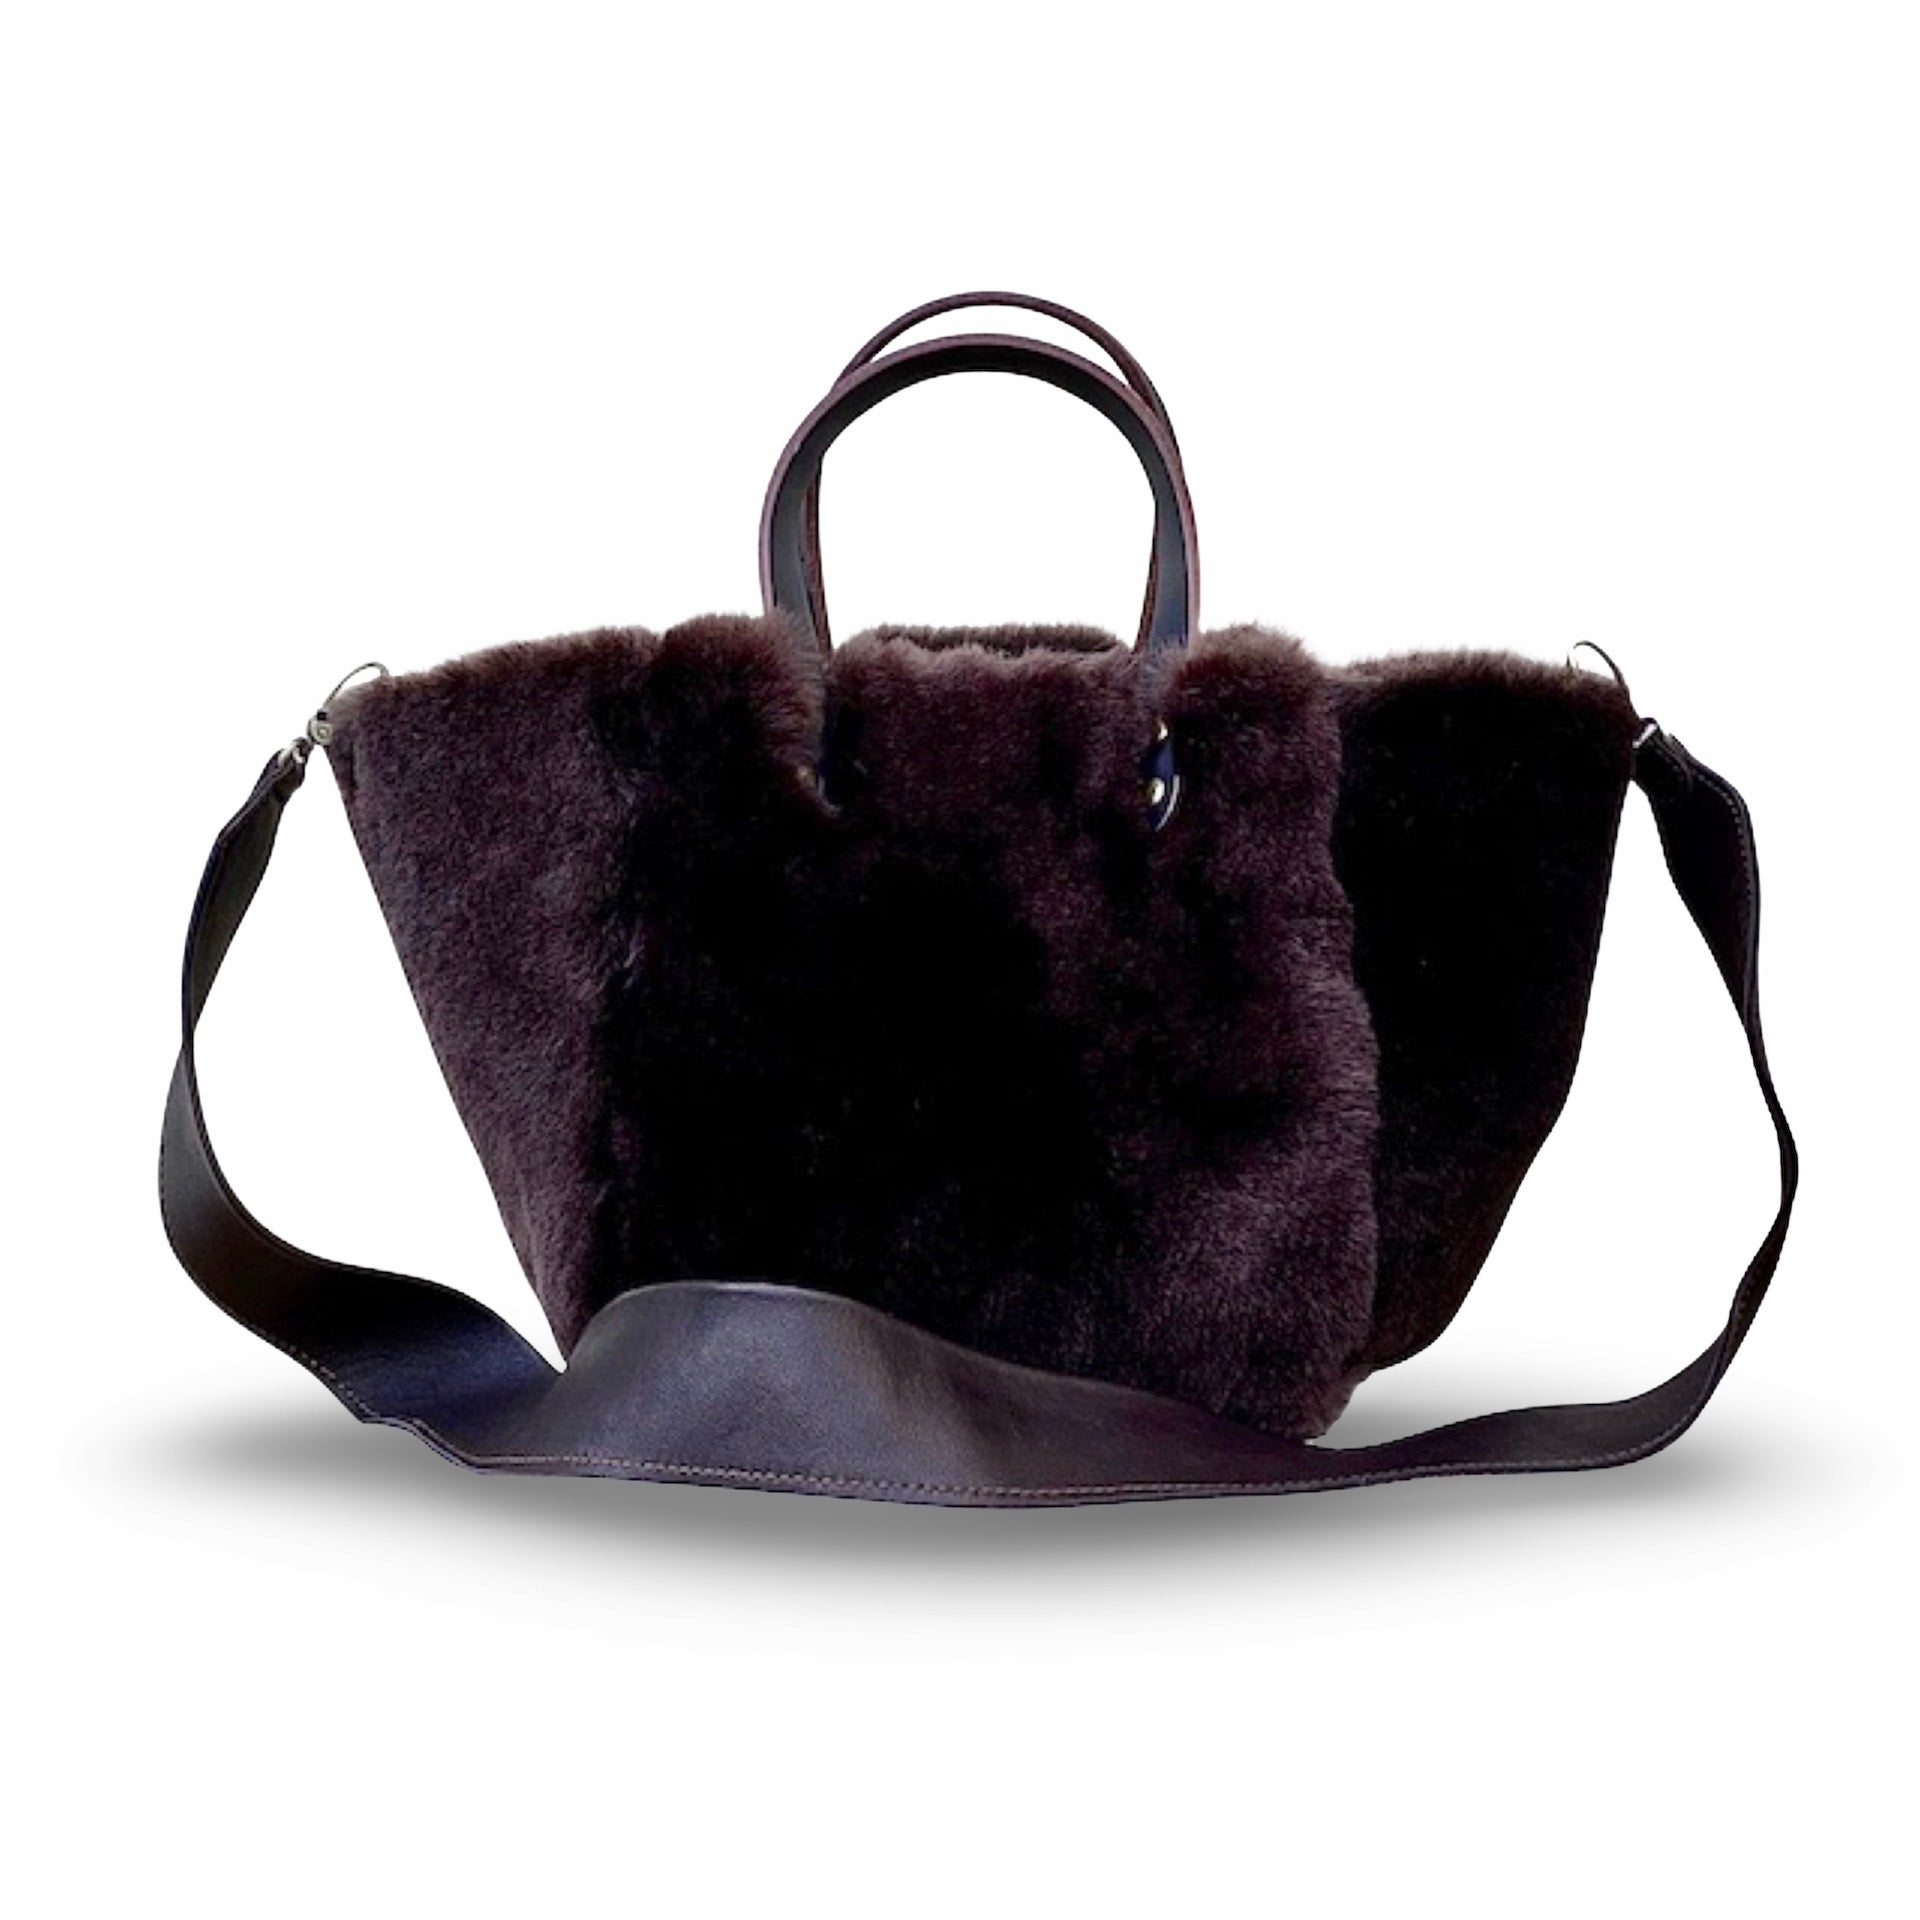 LABEL17 presents The Handbag Shearling Reversible Medium in Darkbrown, Made in Switzerland